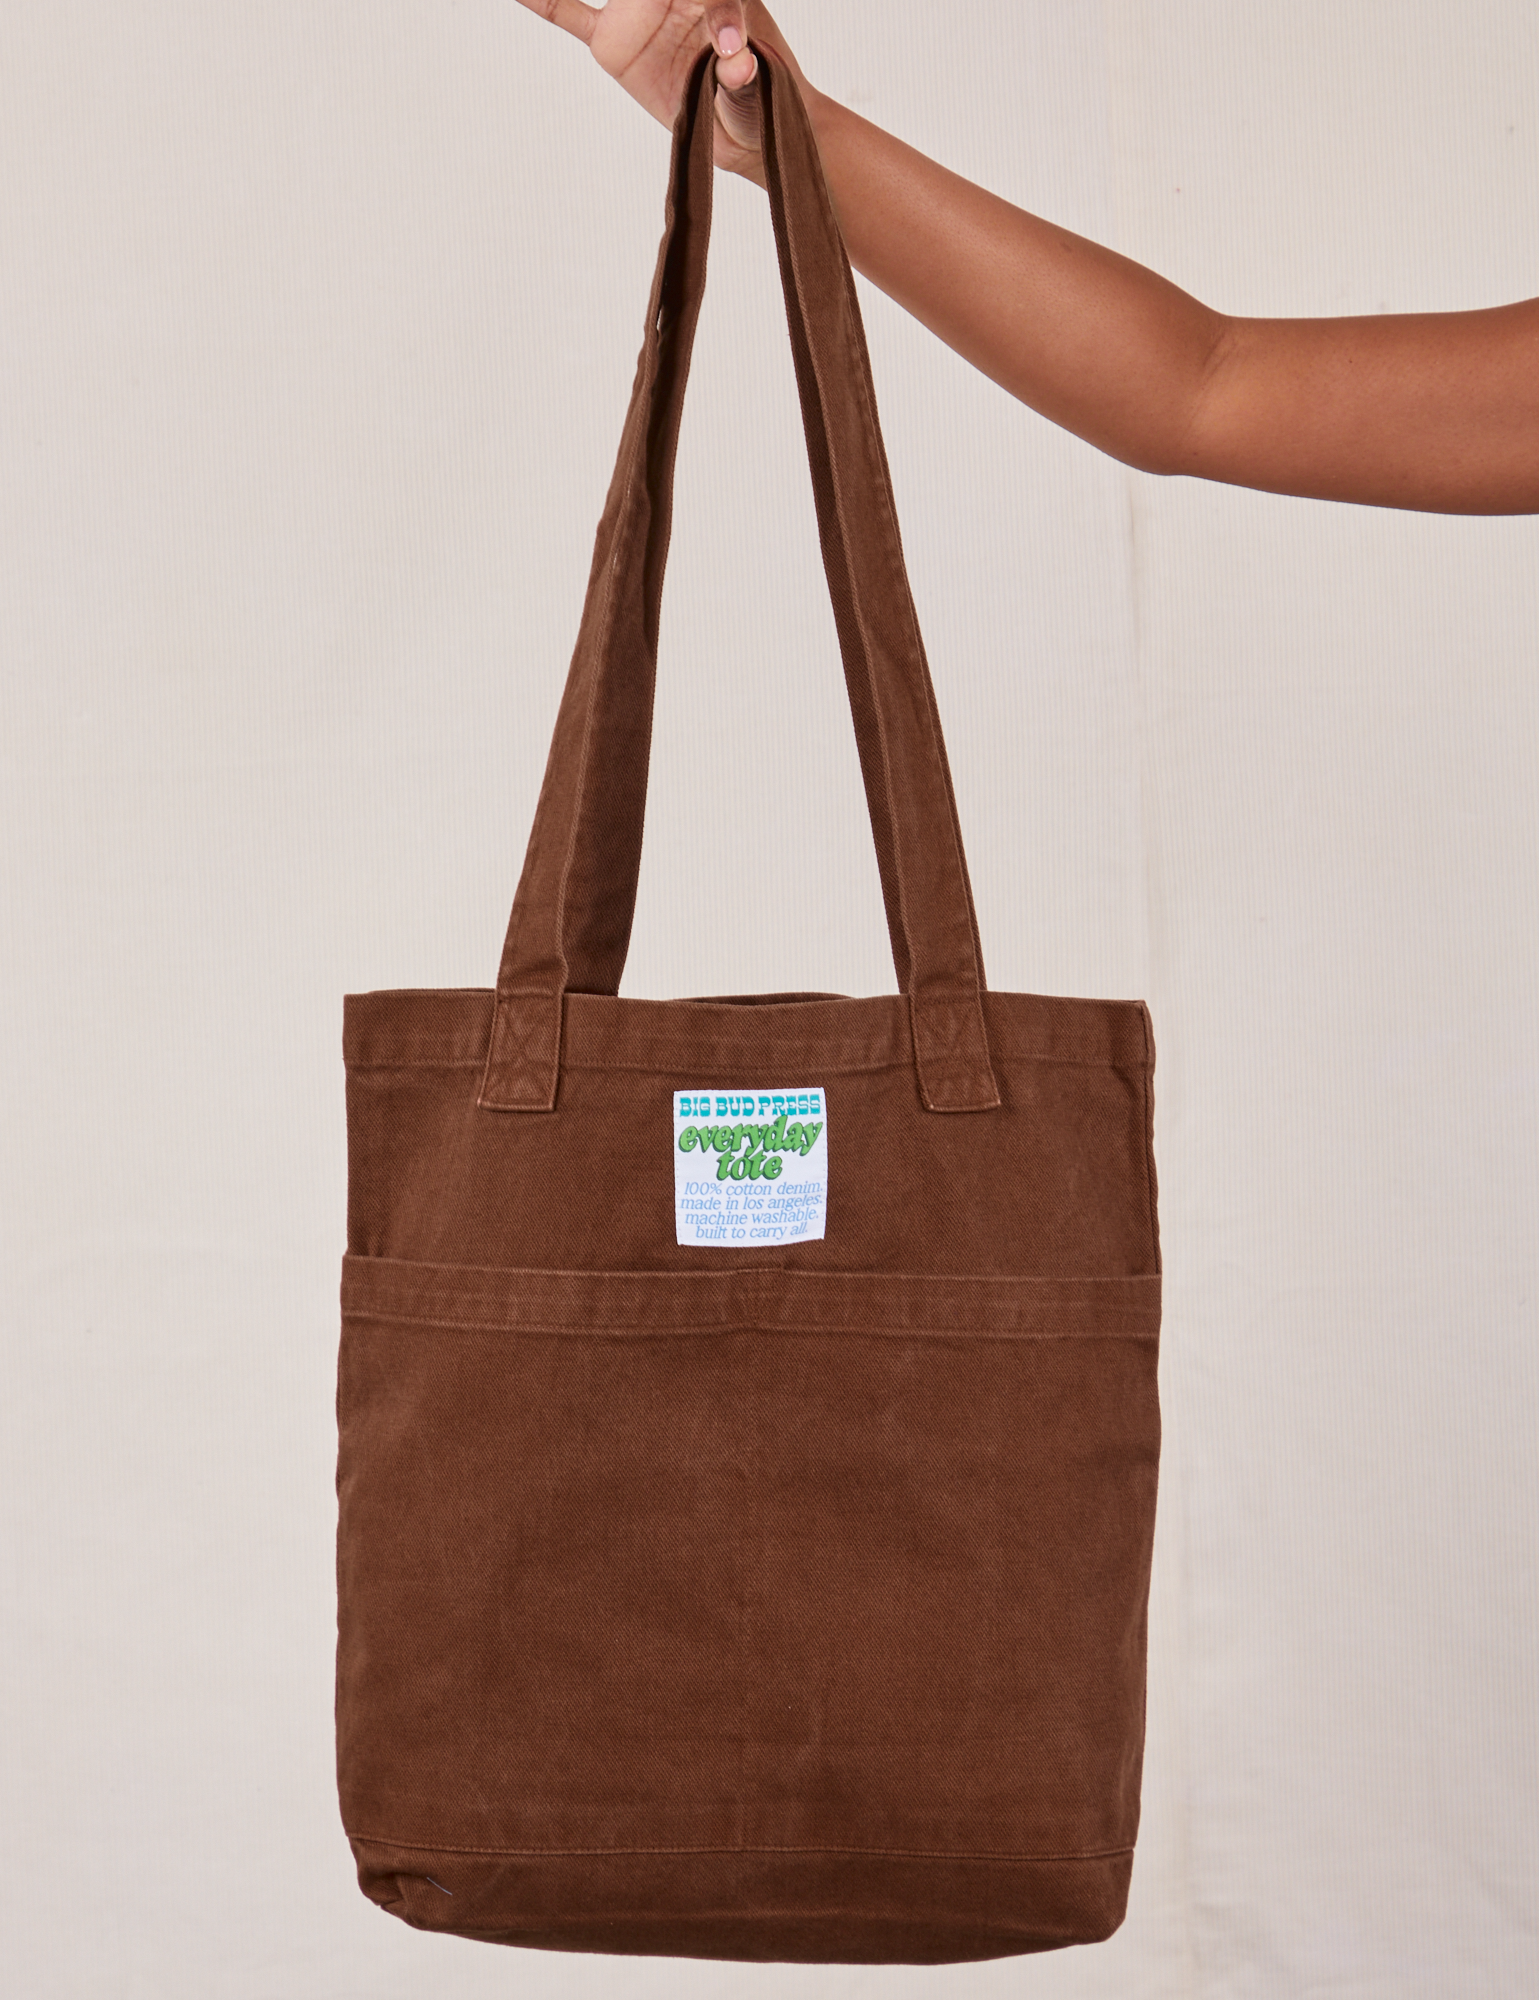 Everyday Tote Bag in Fudgesicle Brown